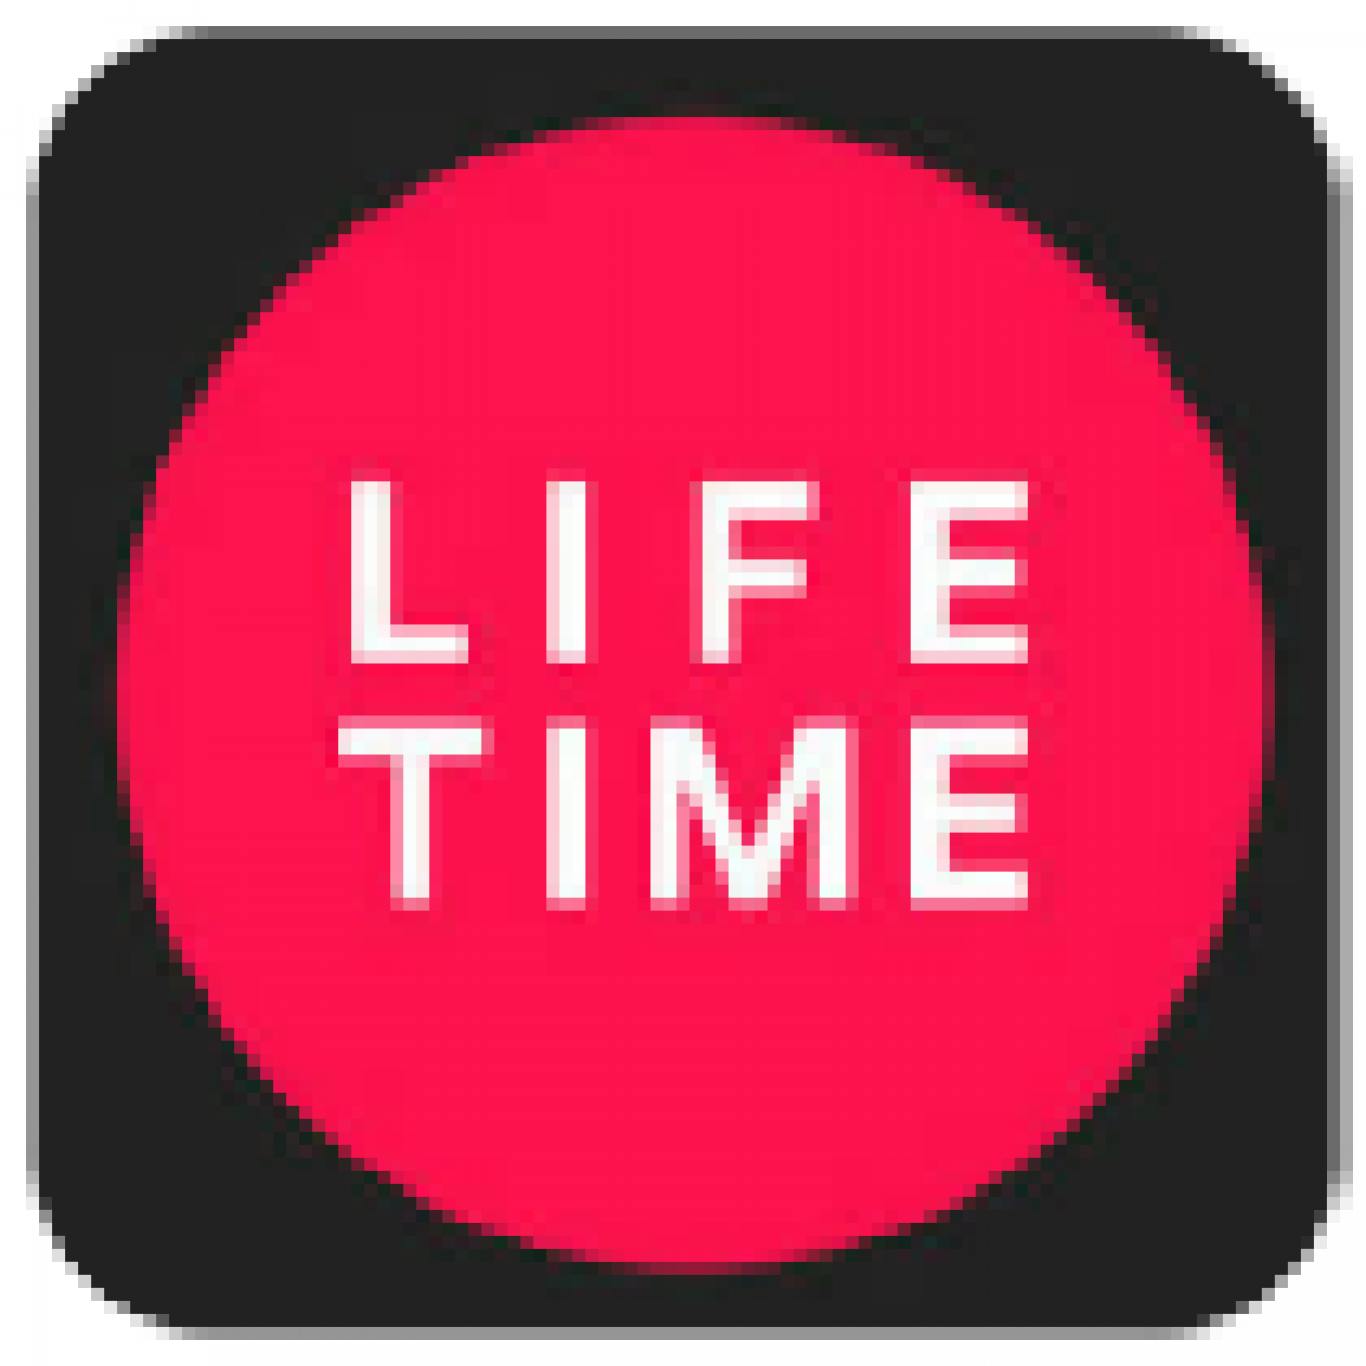 lifetime tv logo